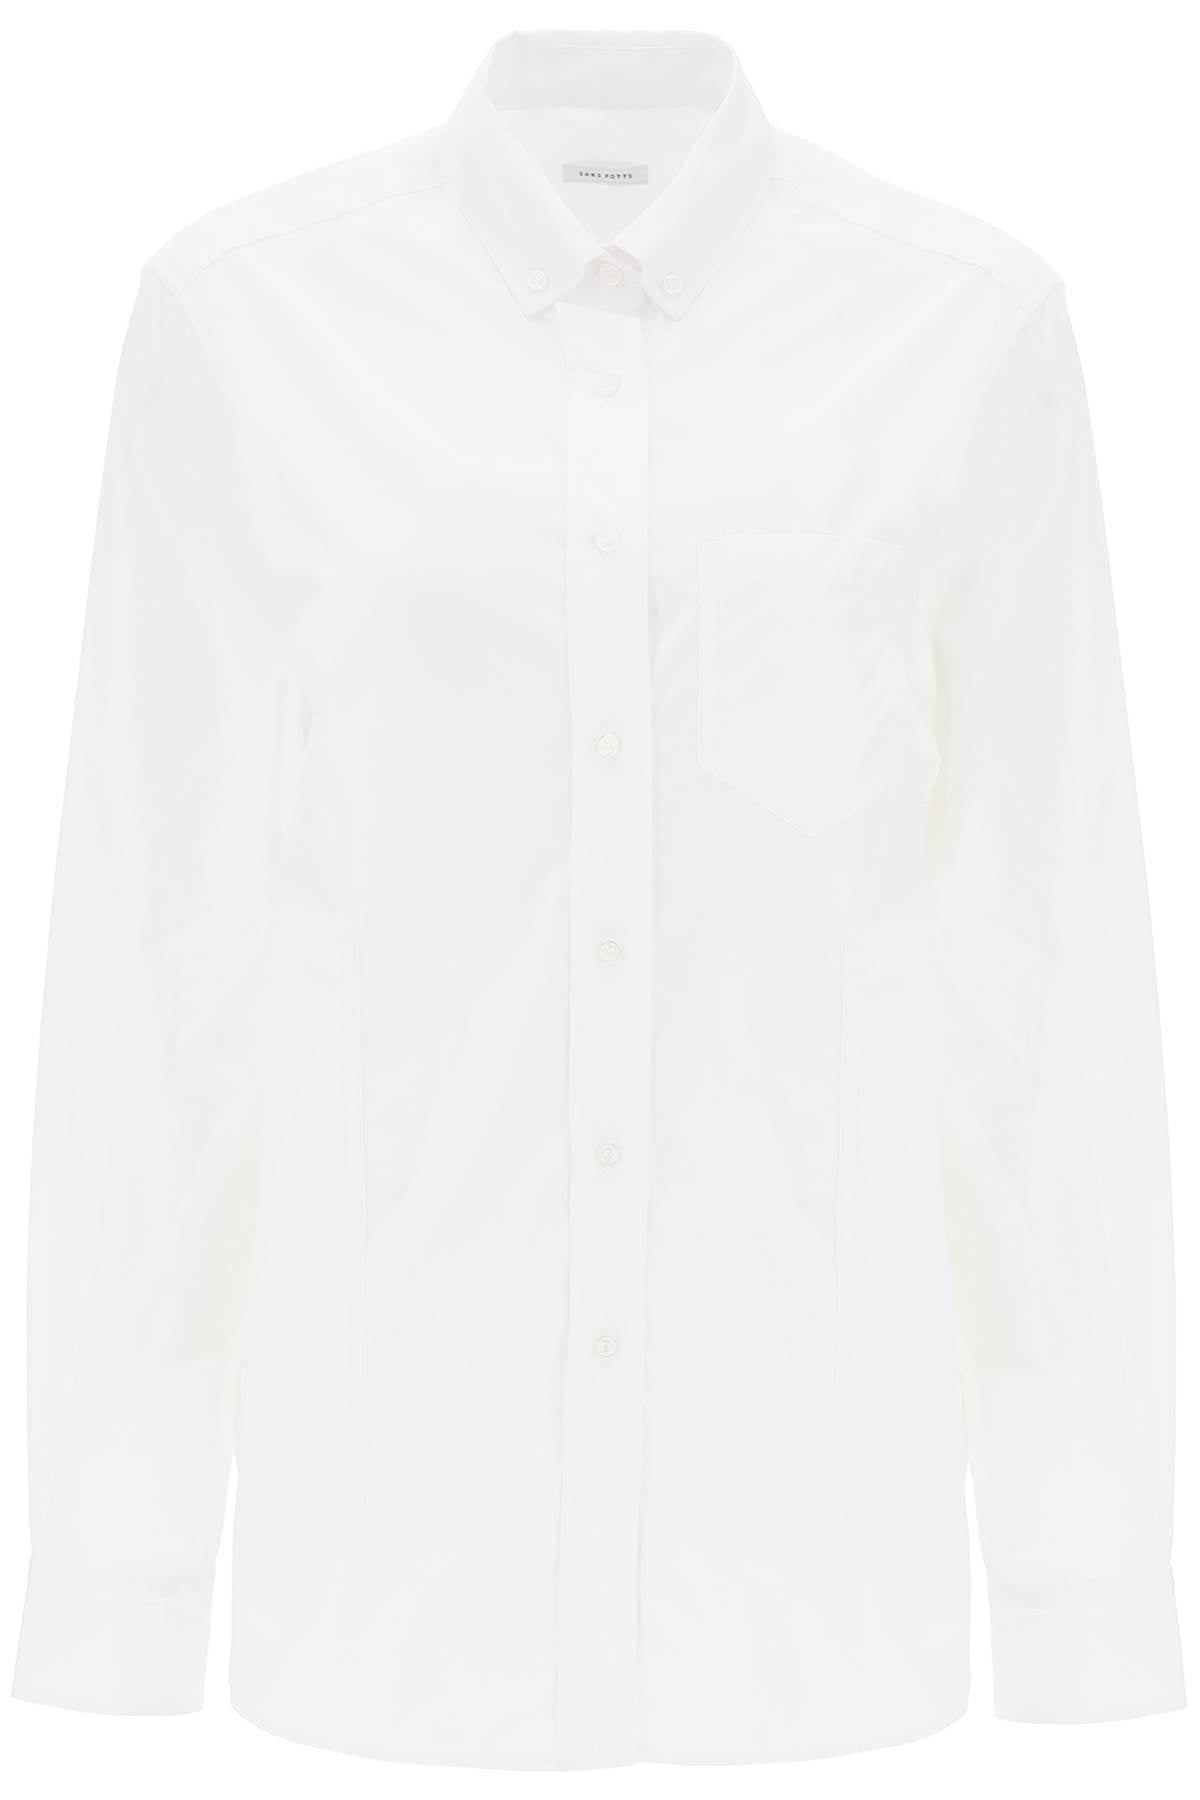 Saks potts william poplin shirt 06525 WHITE